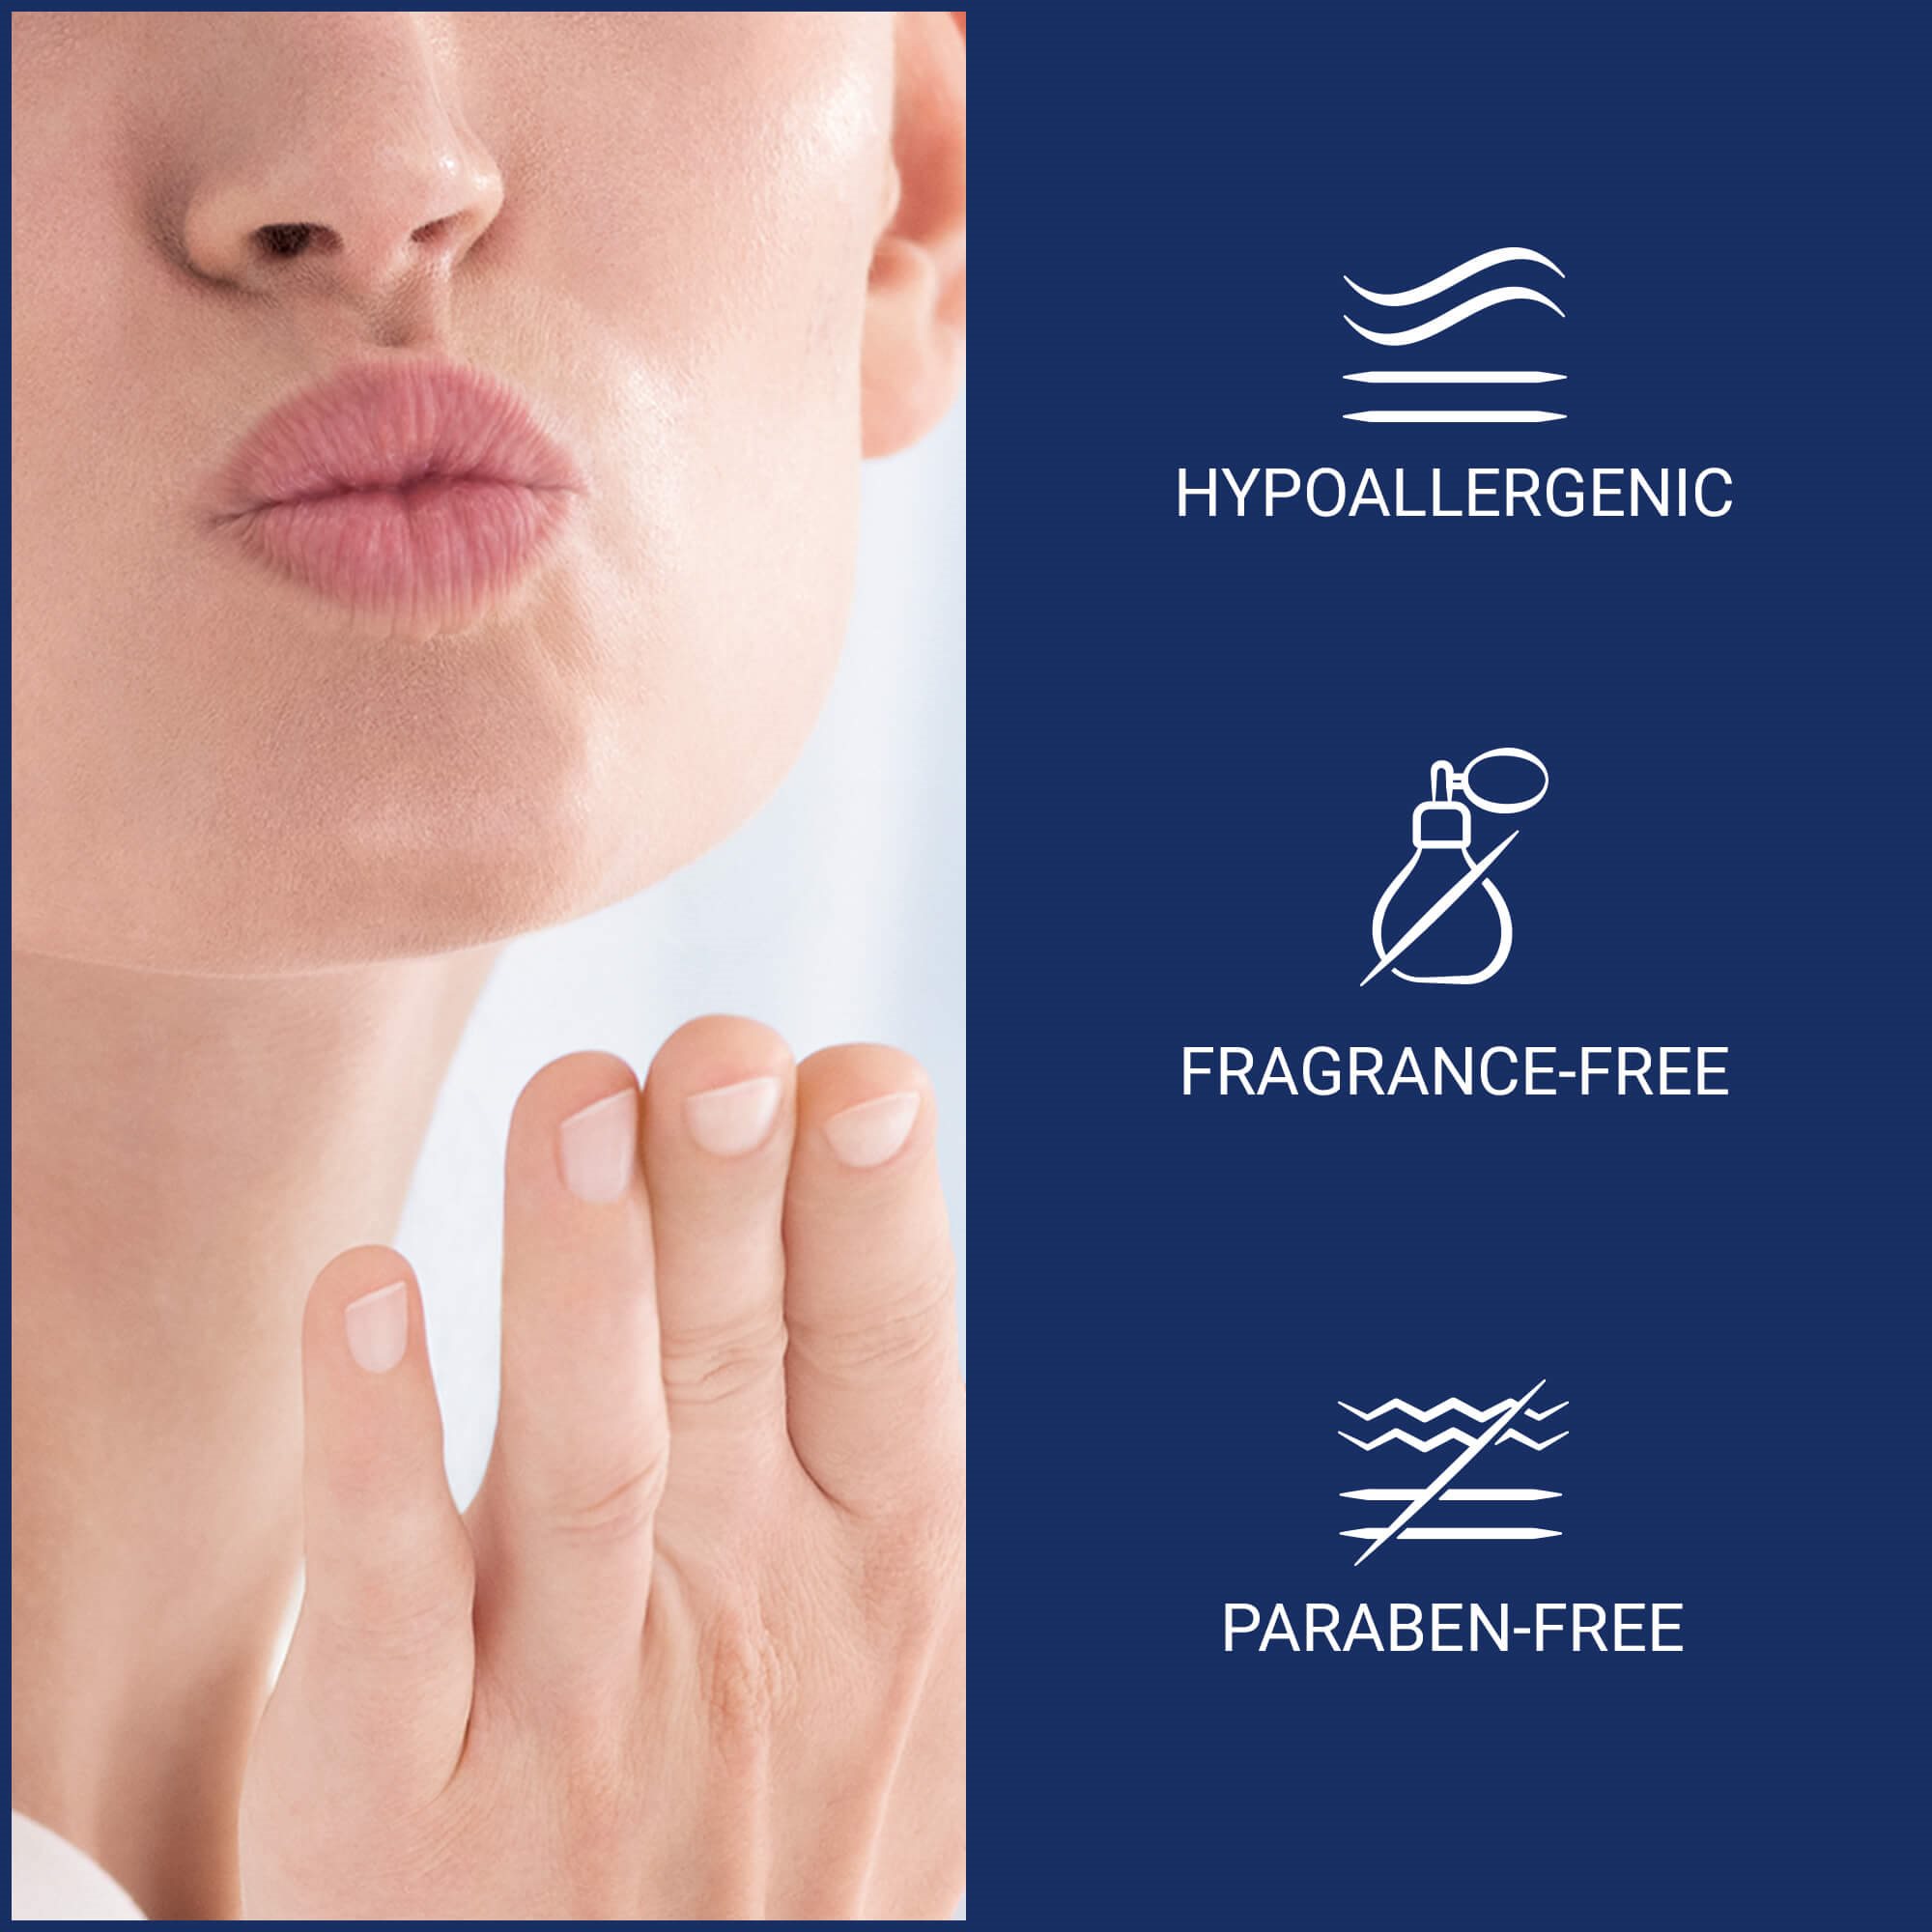 View of model puckering lips with Aquaphor lip repair product benefits.